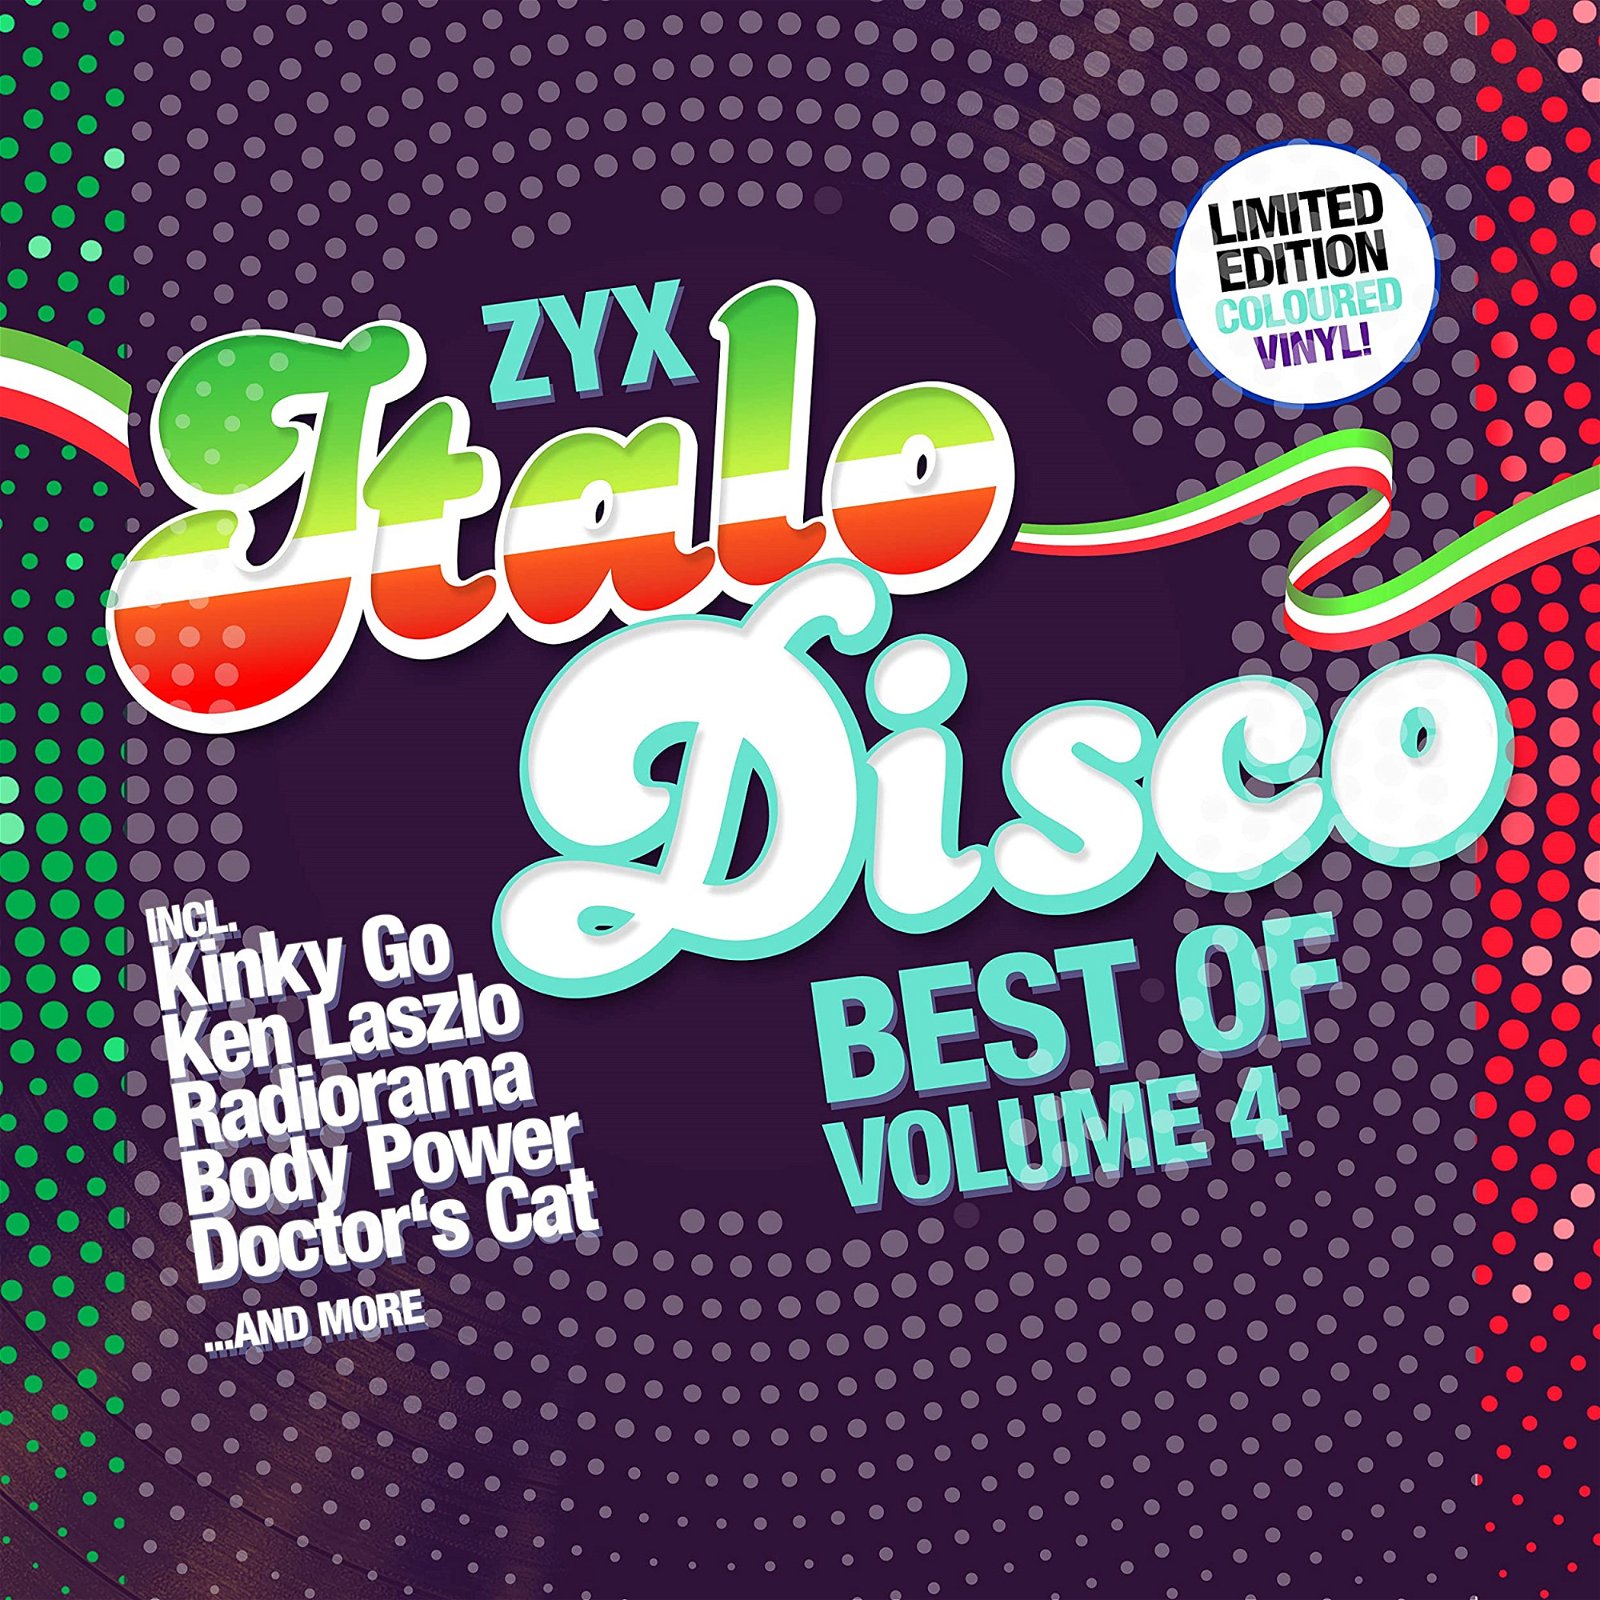 CD Shop - V/A ZYX ITALO DISCO: BEST OF VOL.4